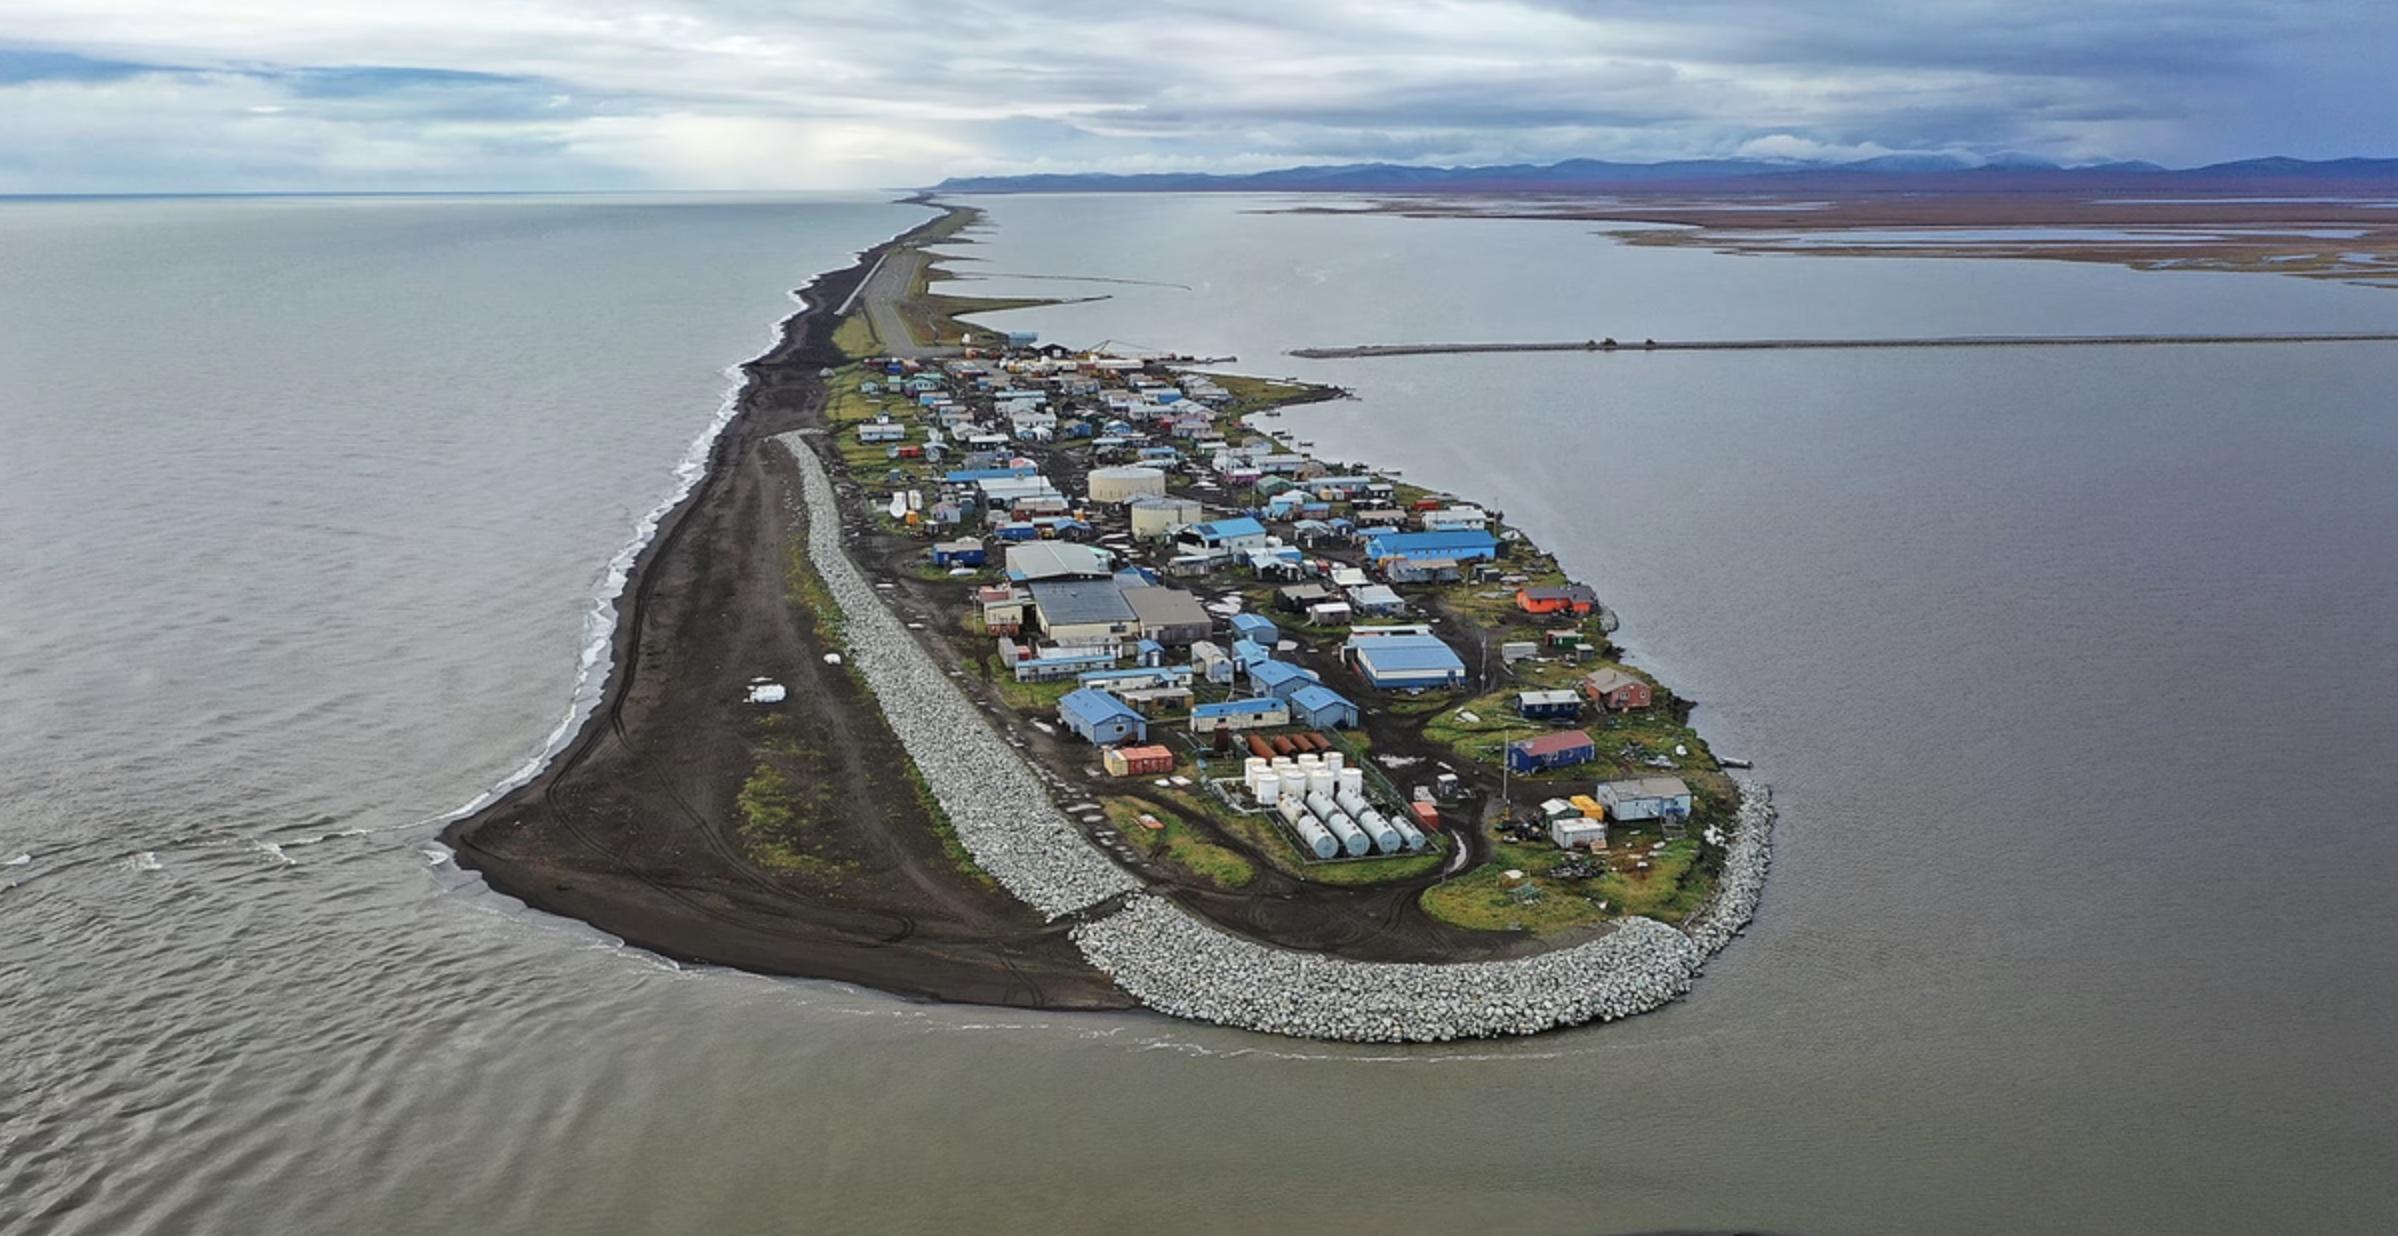 Image is of the island of Kivalina, Alaska